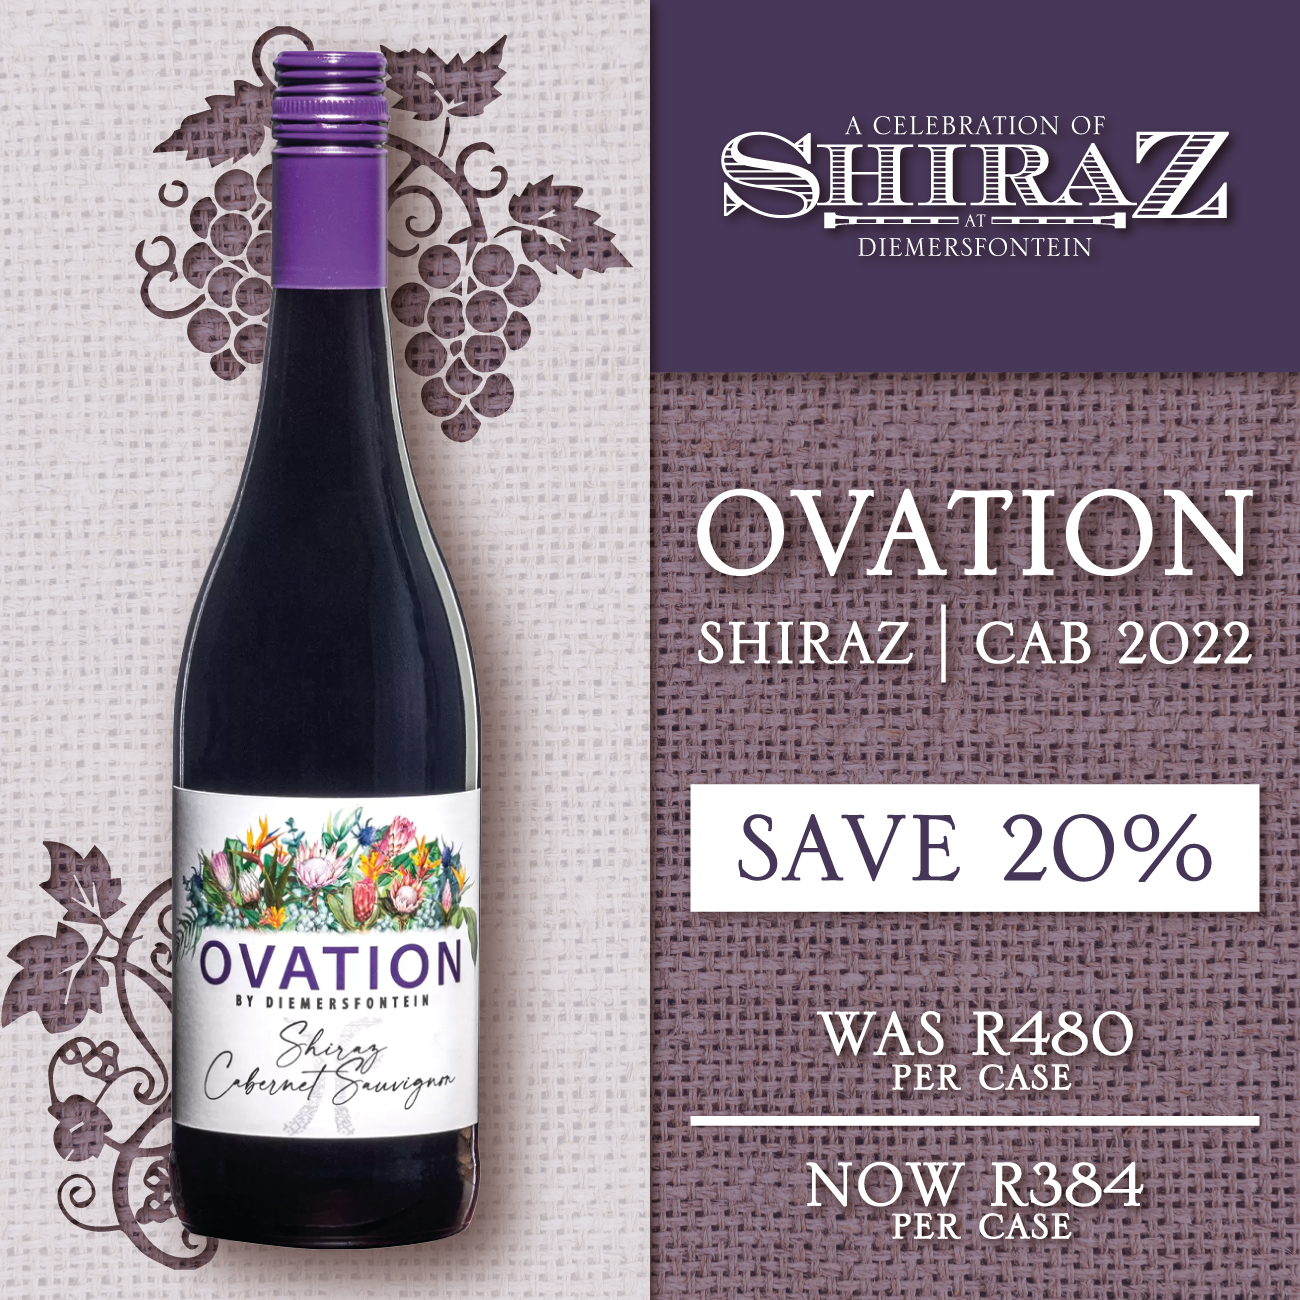 Featured image for “OVATION SHIRAZ/CABERNET SAUVIGNON 2022”